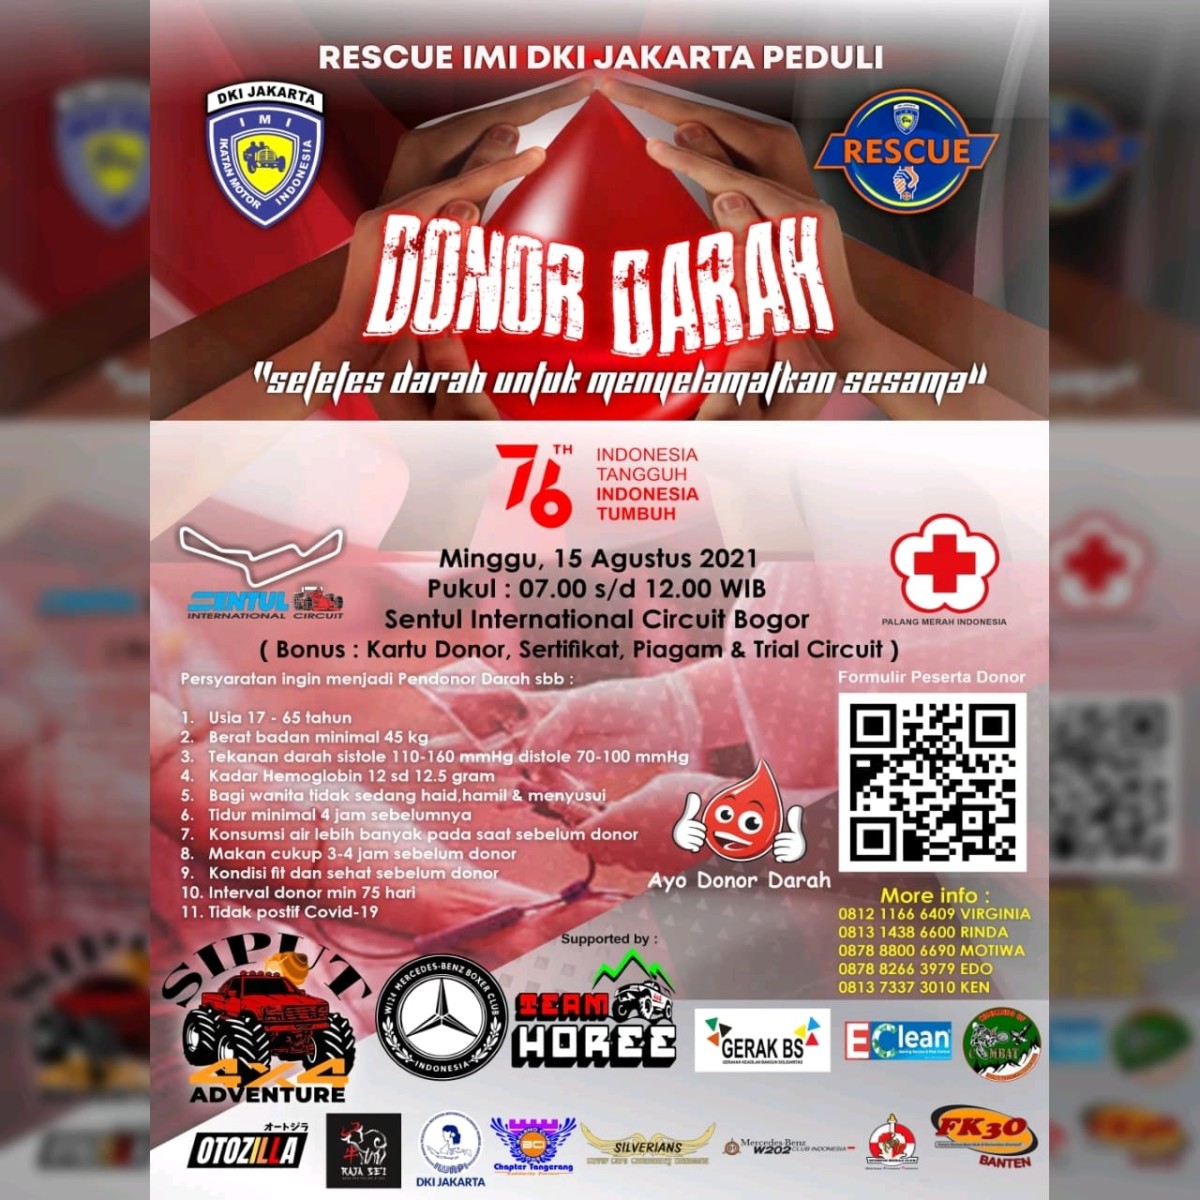 Donor Darah Rescue IMI DKI; 'Kami Berbagi, Kami Peduli'  